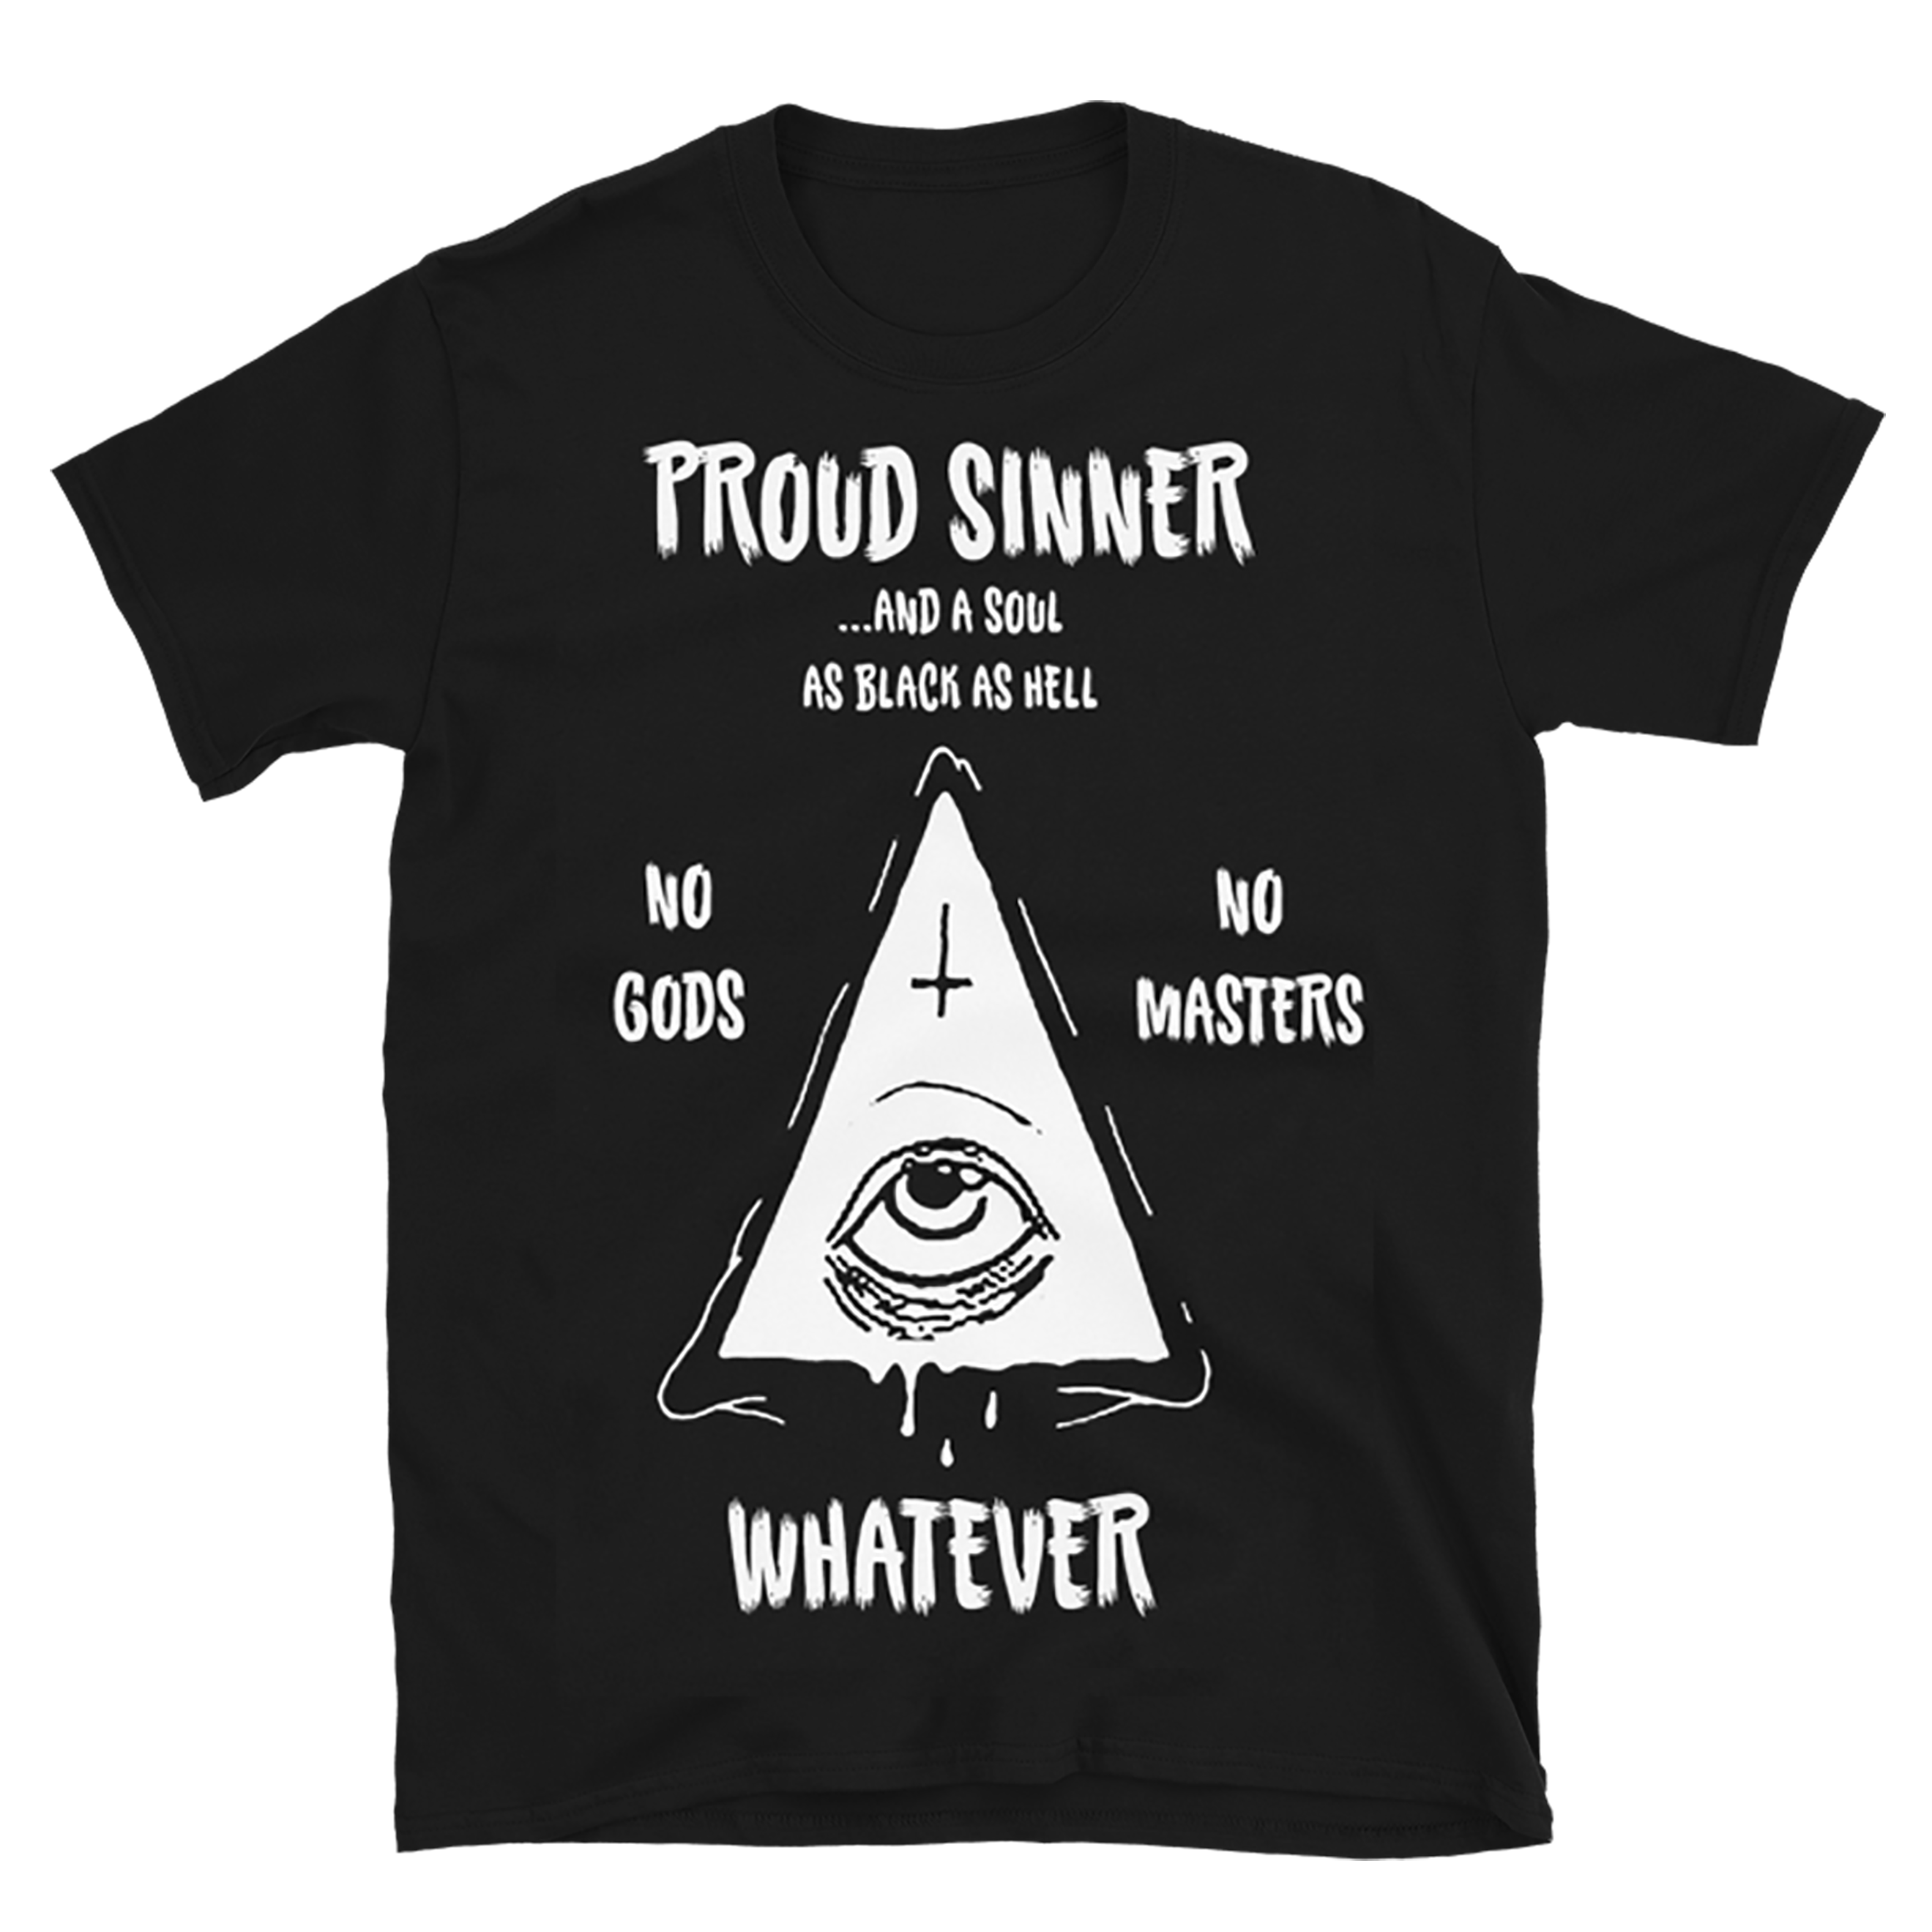 Sinner Short-Sleeve Unisex T-Shirt